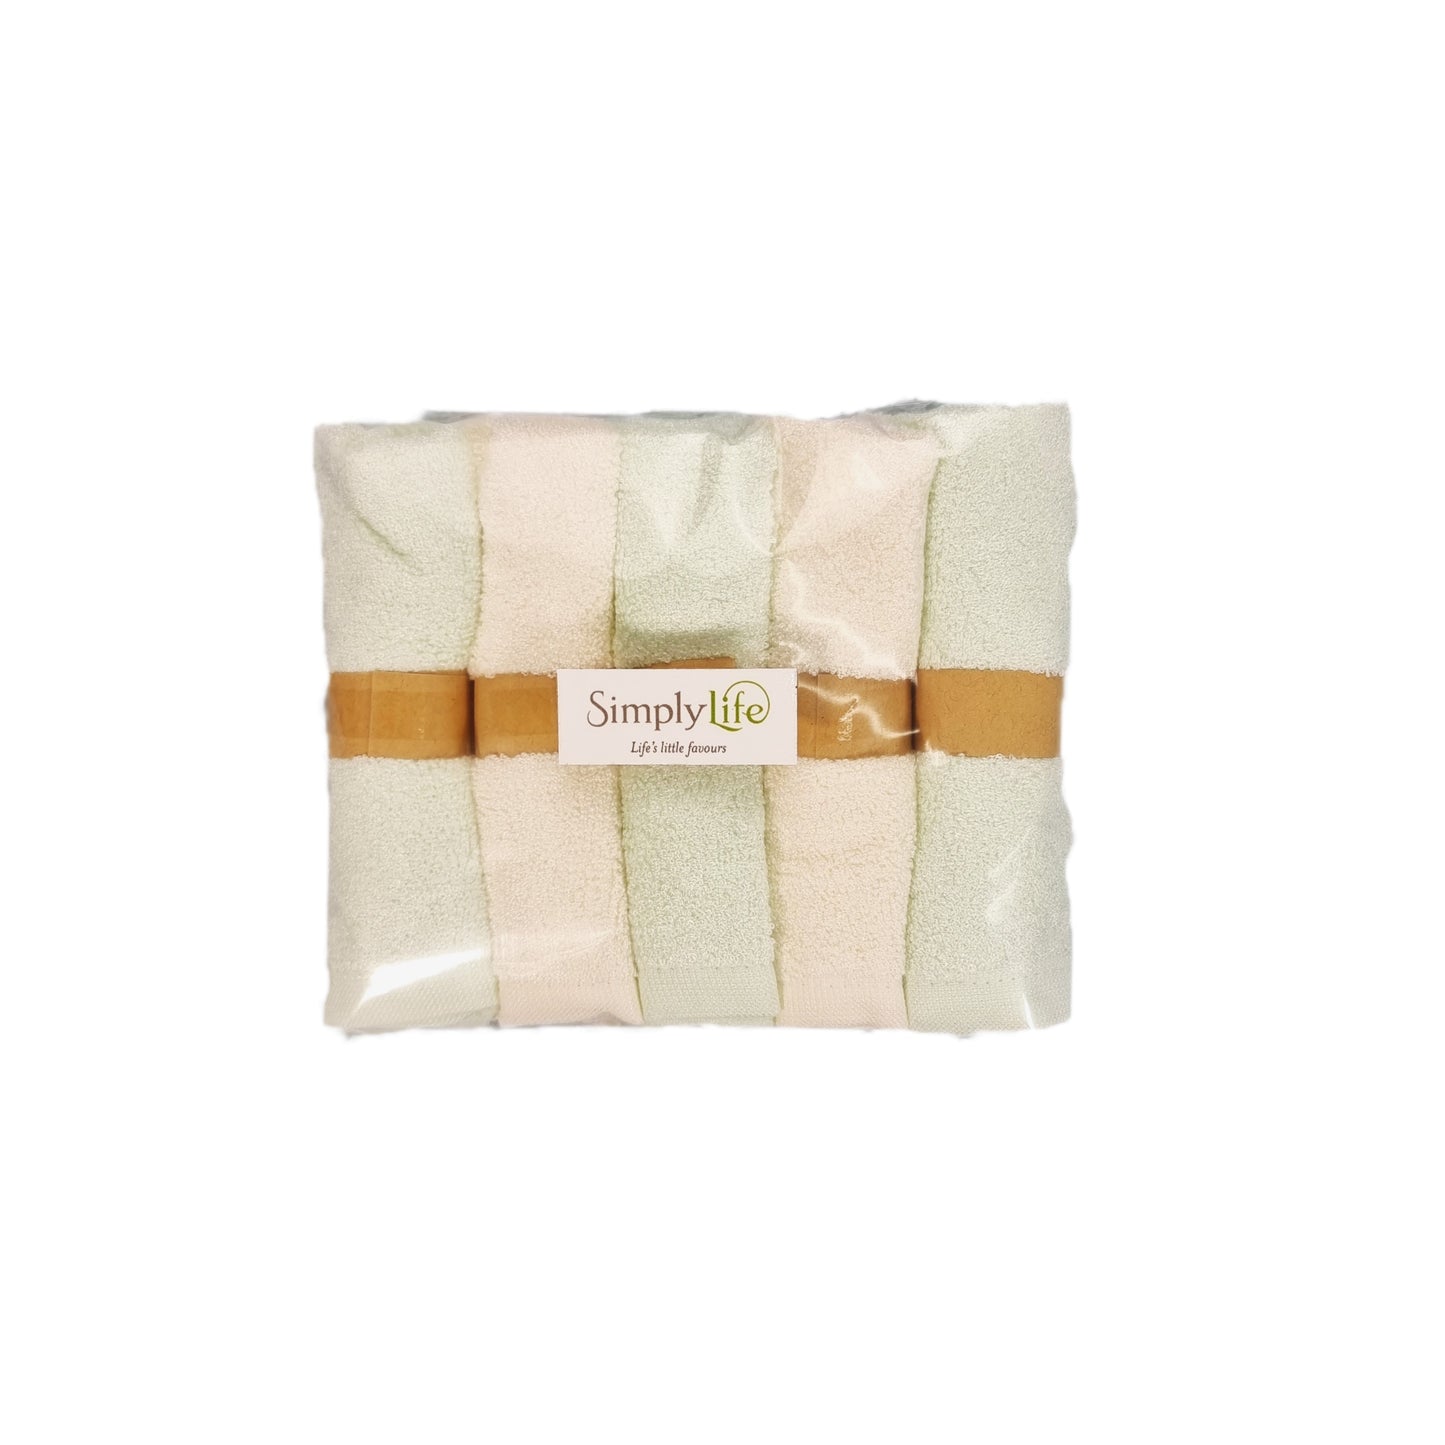 Premium Bamboo Wash / Face Cloth (5-Pack Set)